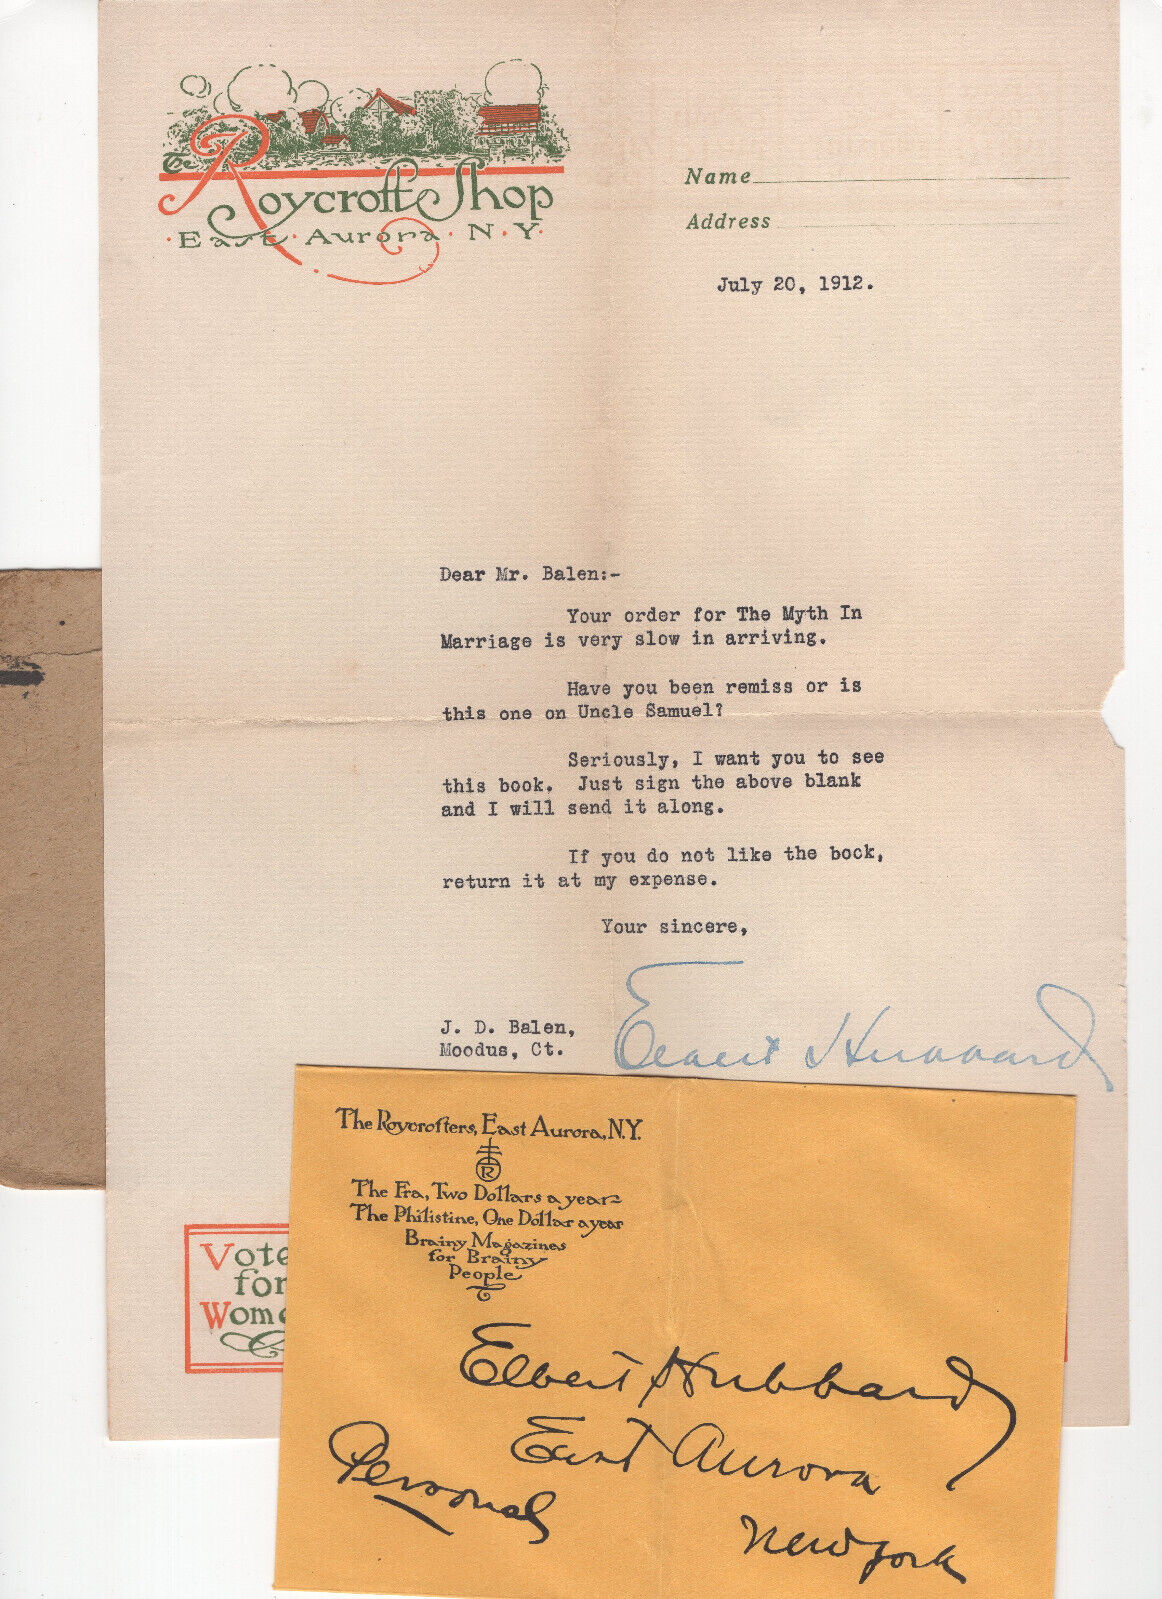 Elbert Hubbard Signed Letter The Roycroft Shop Letterhead Envelope Arts & Crafts